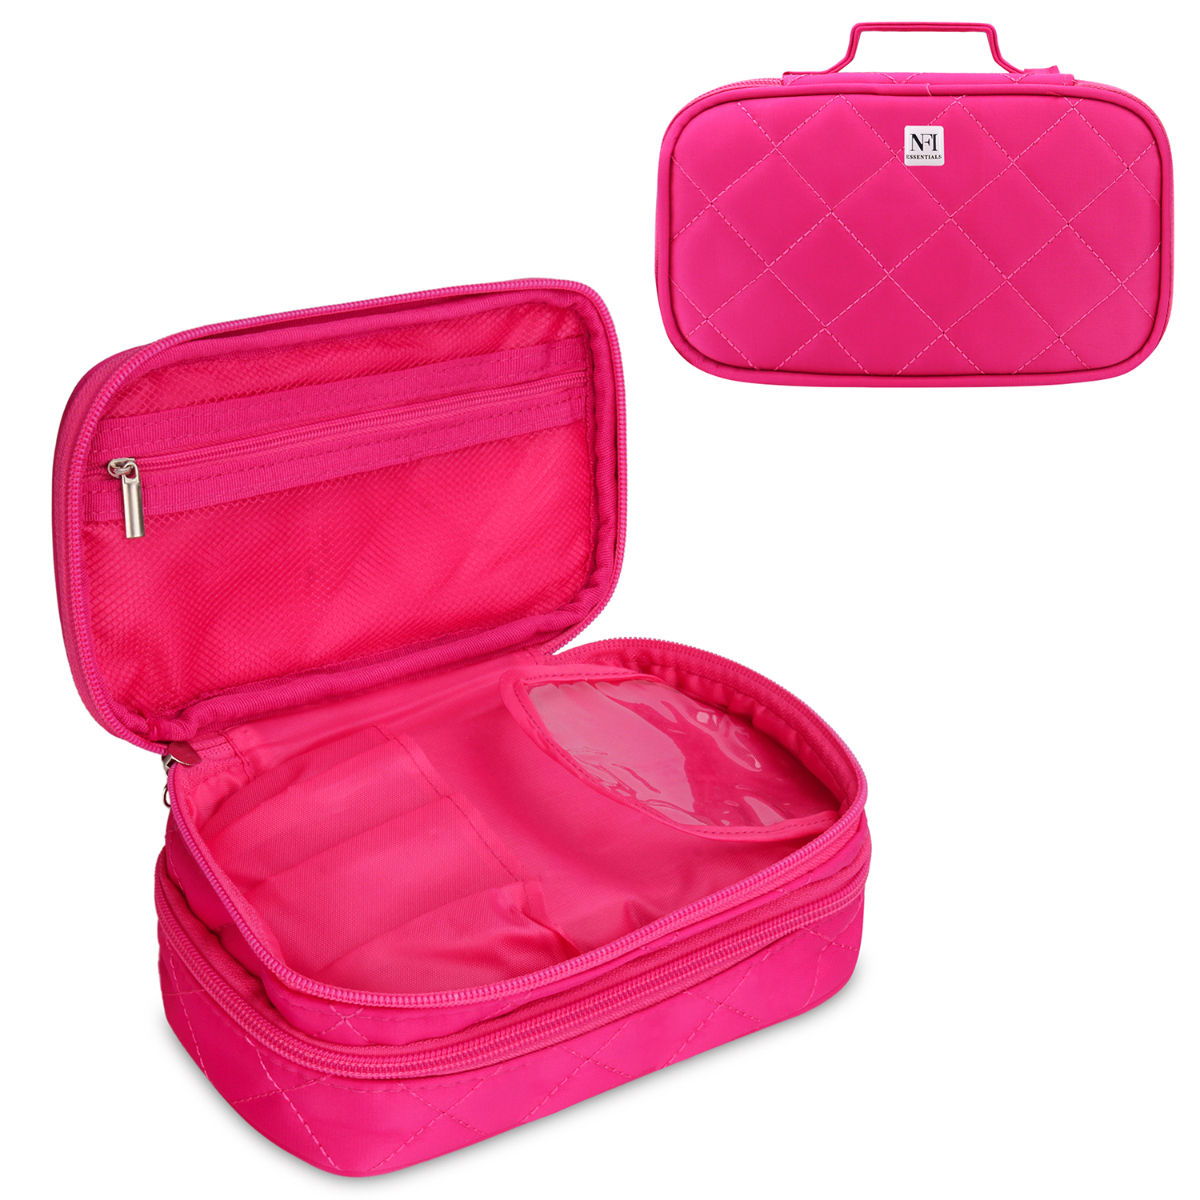 BAKLUCK Makeup Bag Travel Cosmetic Bag Double Layer India